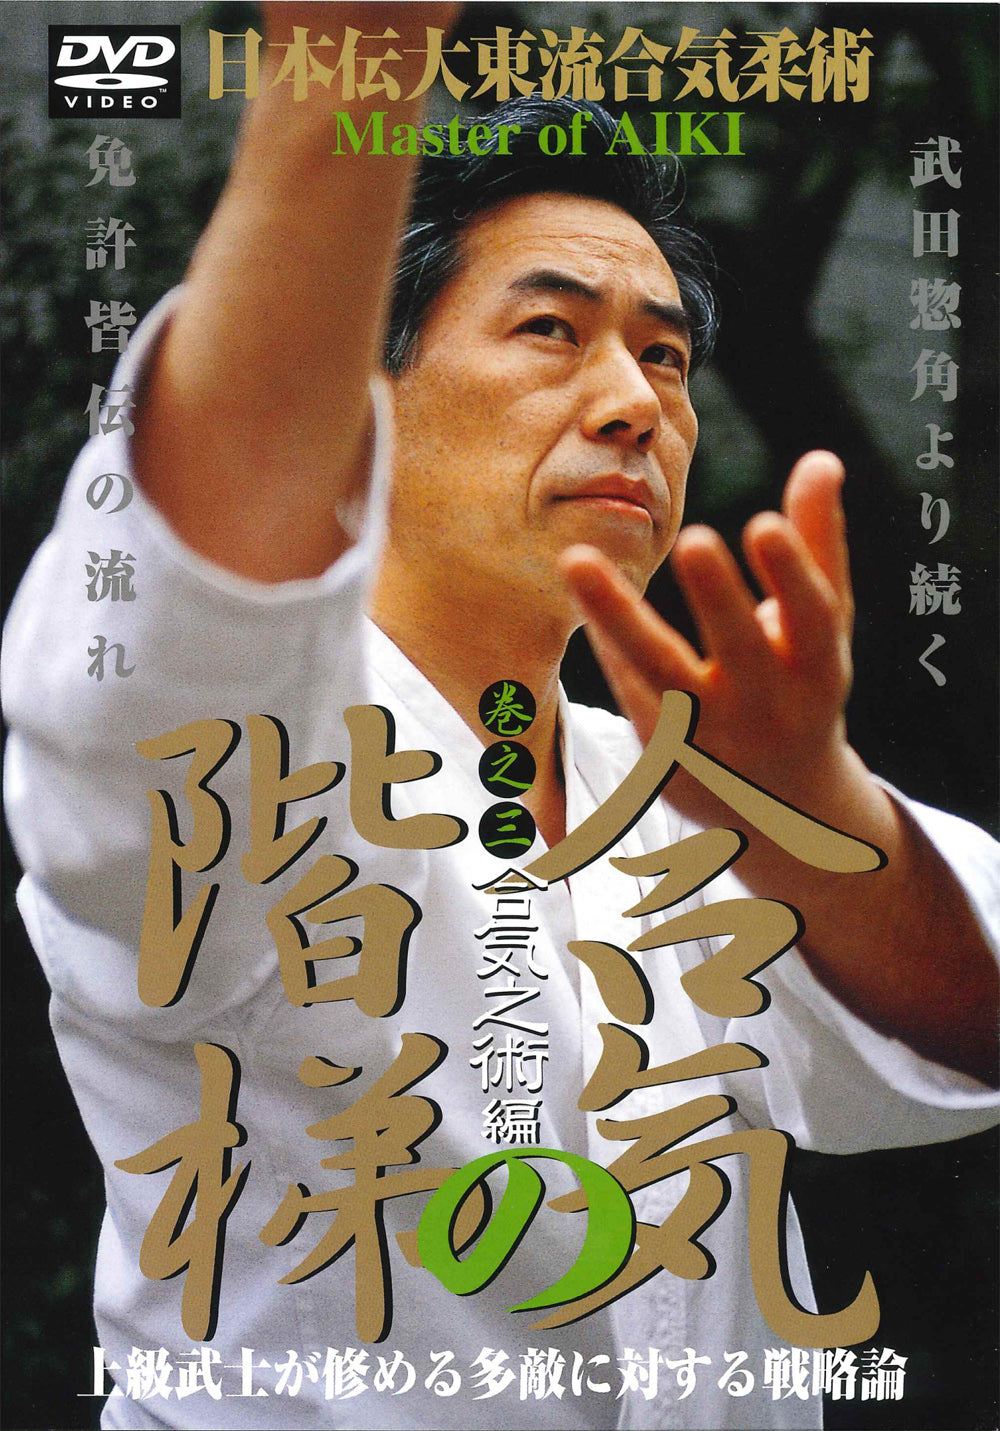 Maestro de Aiki DVD 3 de Kogen Sugasawa